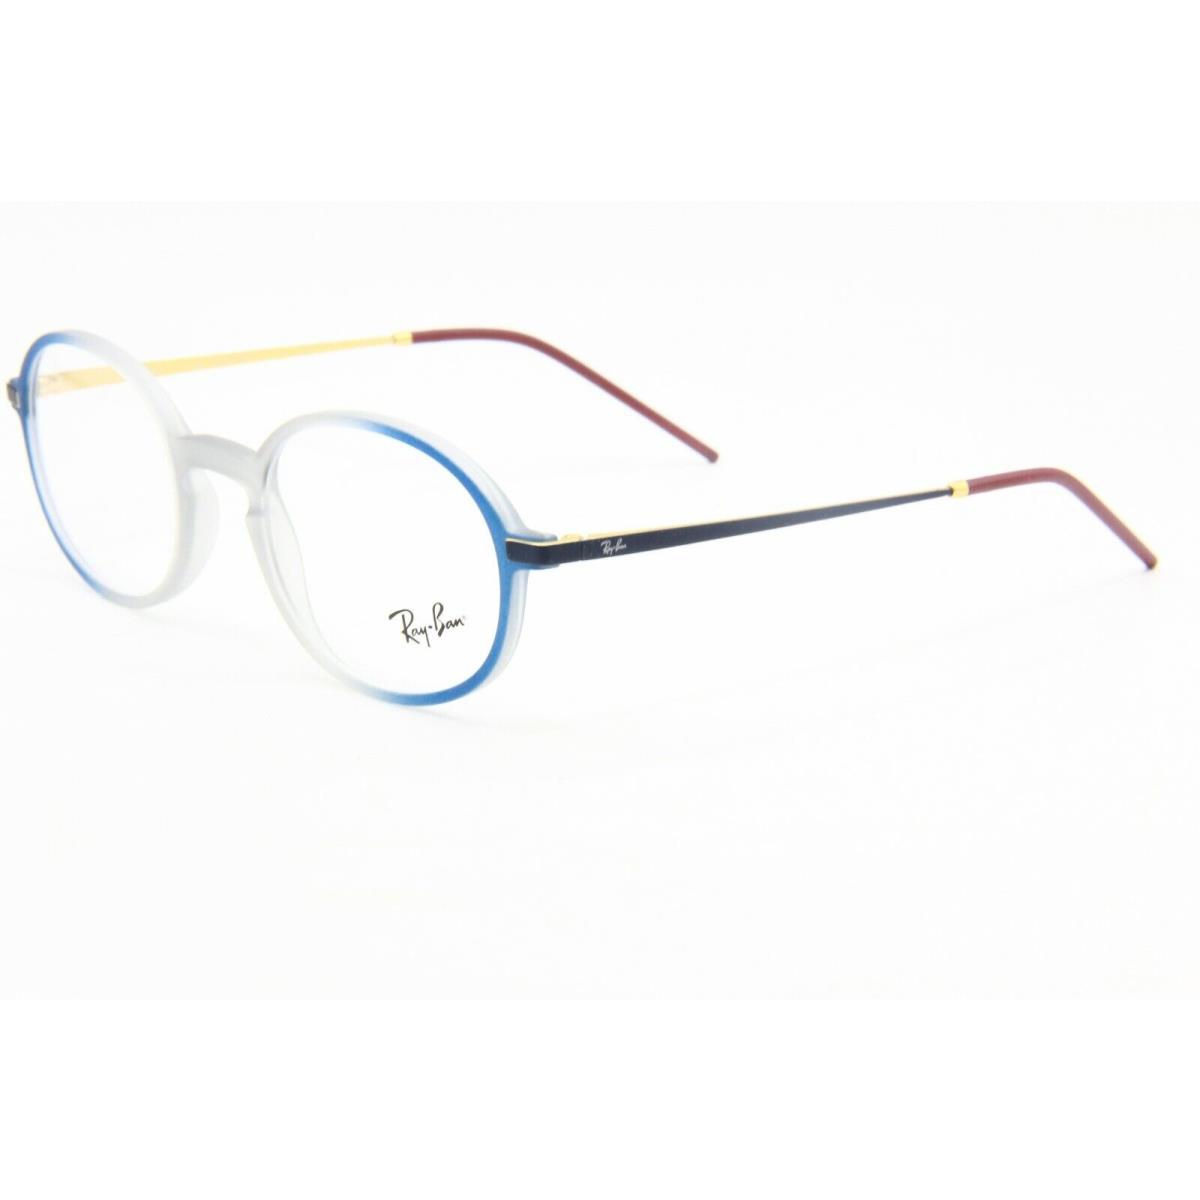 Ray-ban Ray Ban RB 7153 5821 Blue Eyeglasses Frame RB 5821 RX 50-21